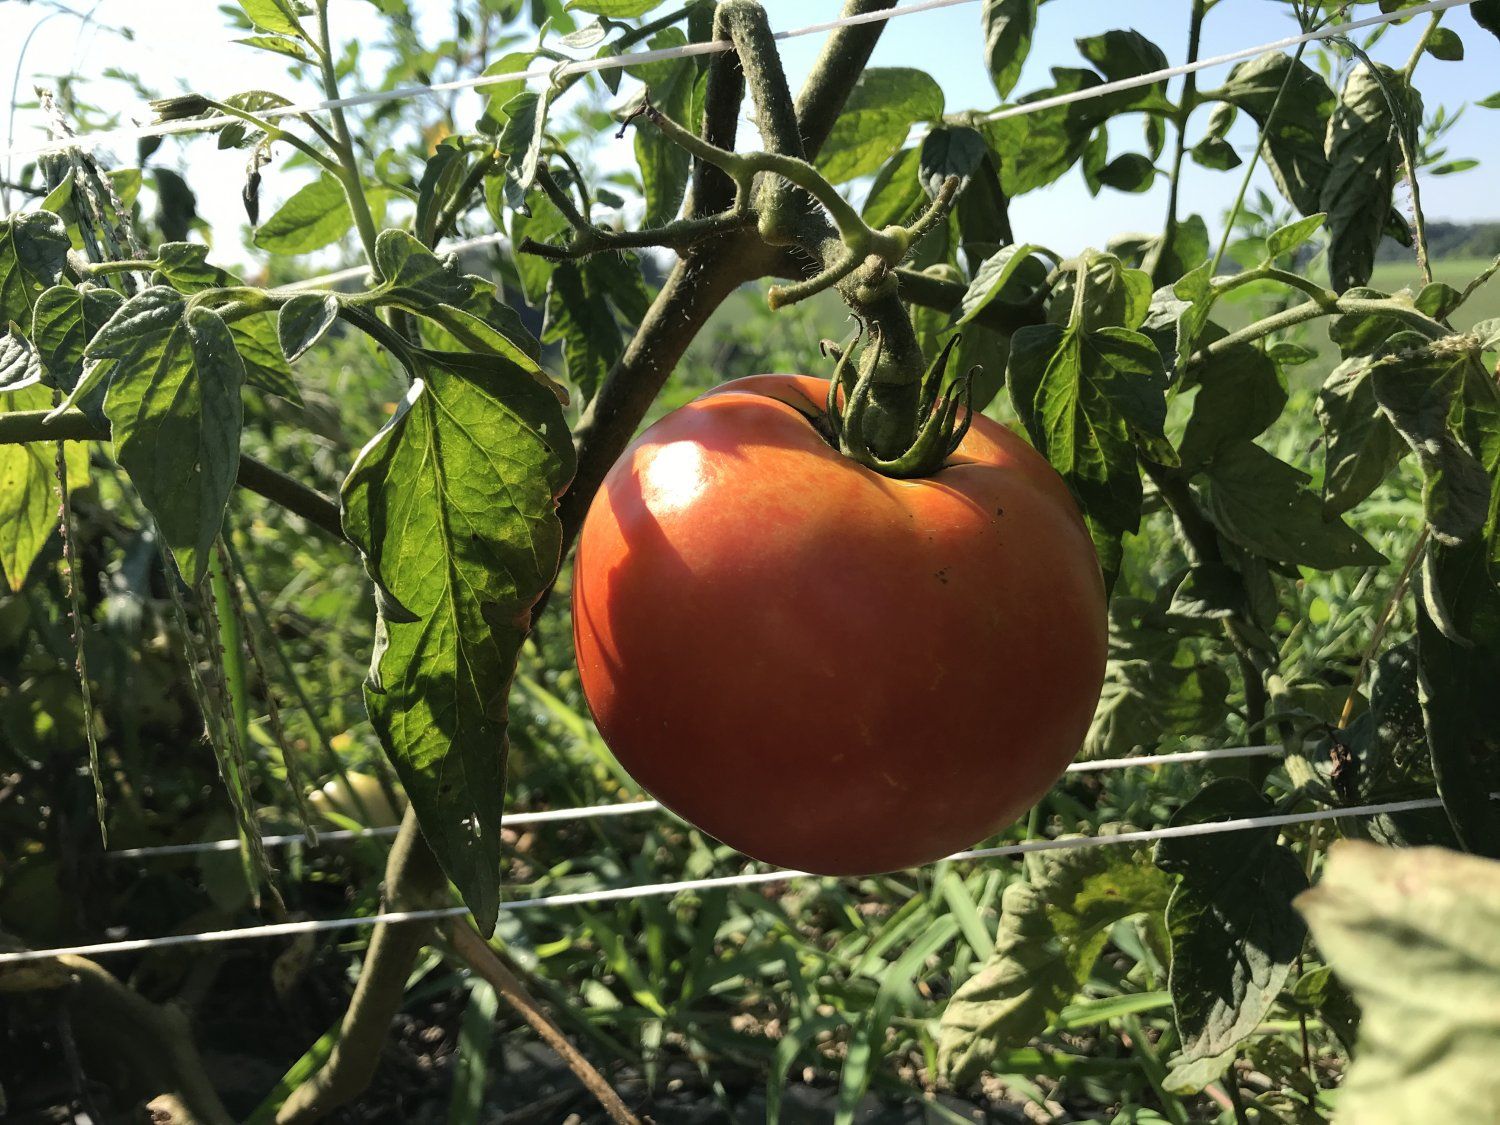 Previous Happening: Tomatoes & Sweet Corn Say SUMMER!